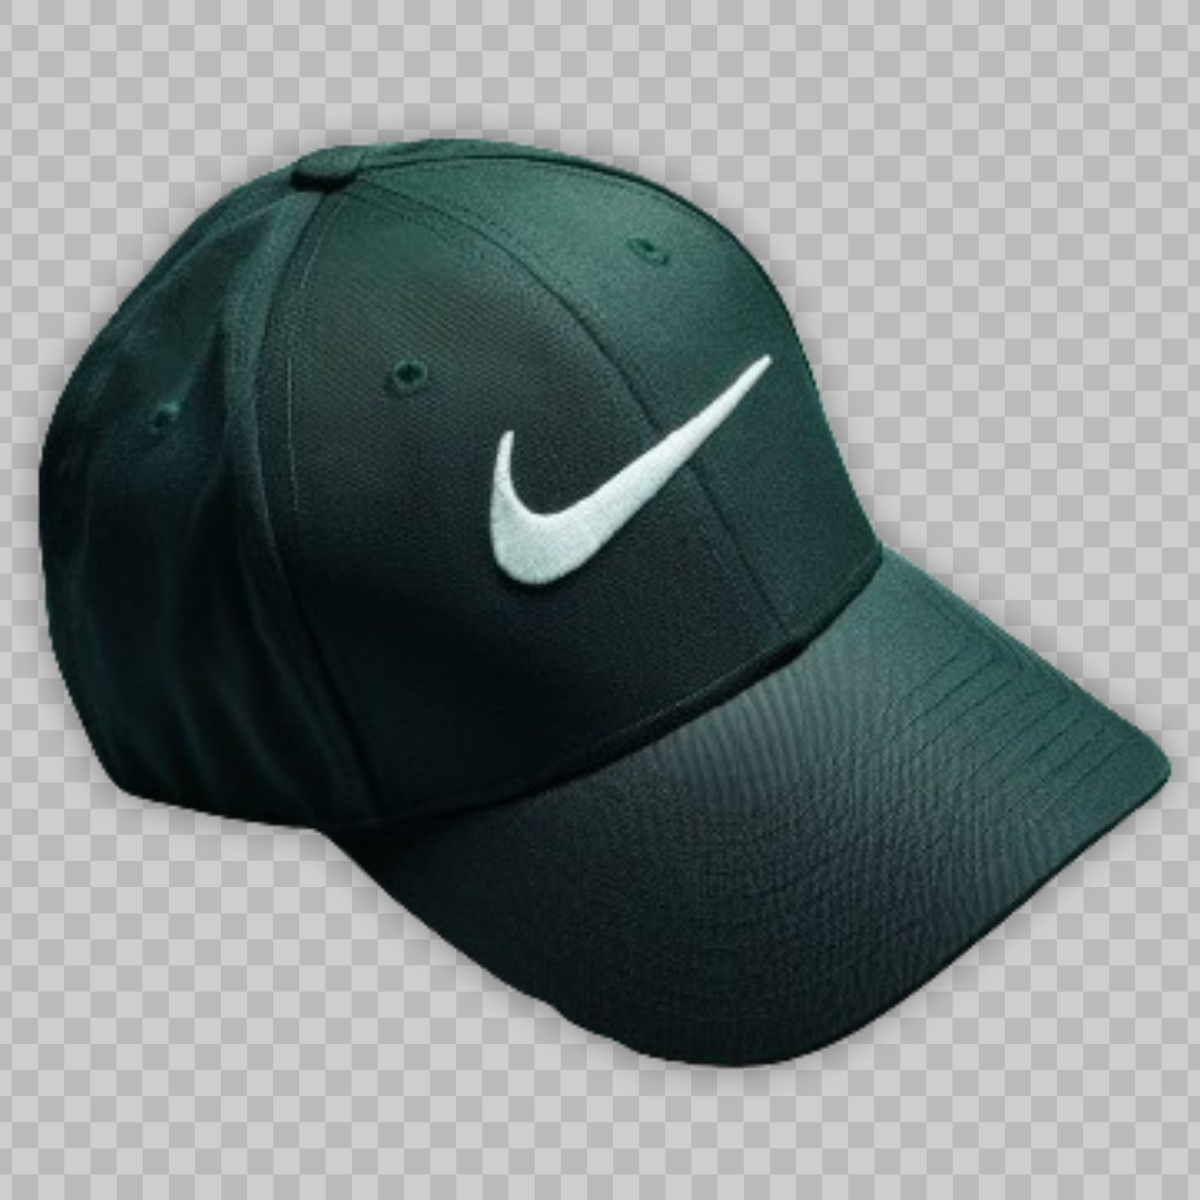 Dark Green color Nike Cap PNG image download for free